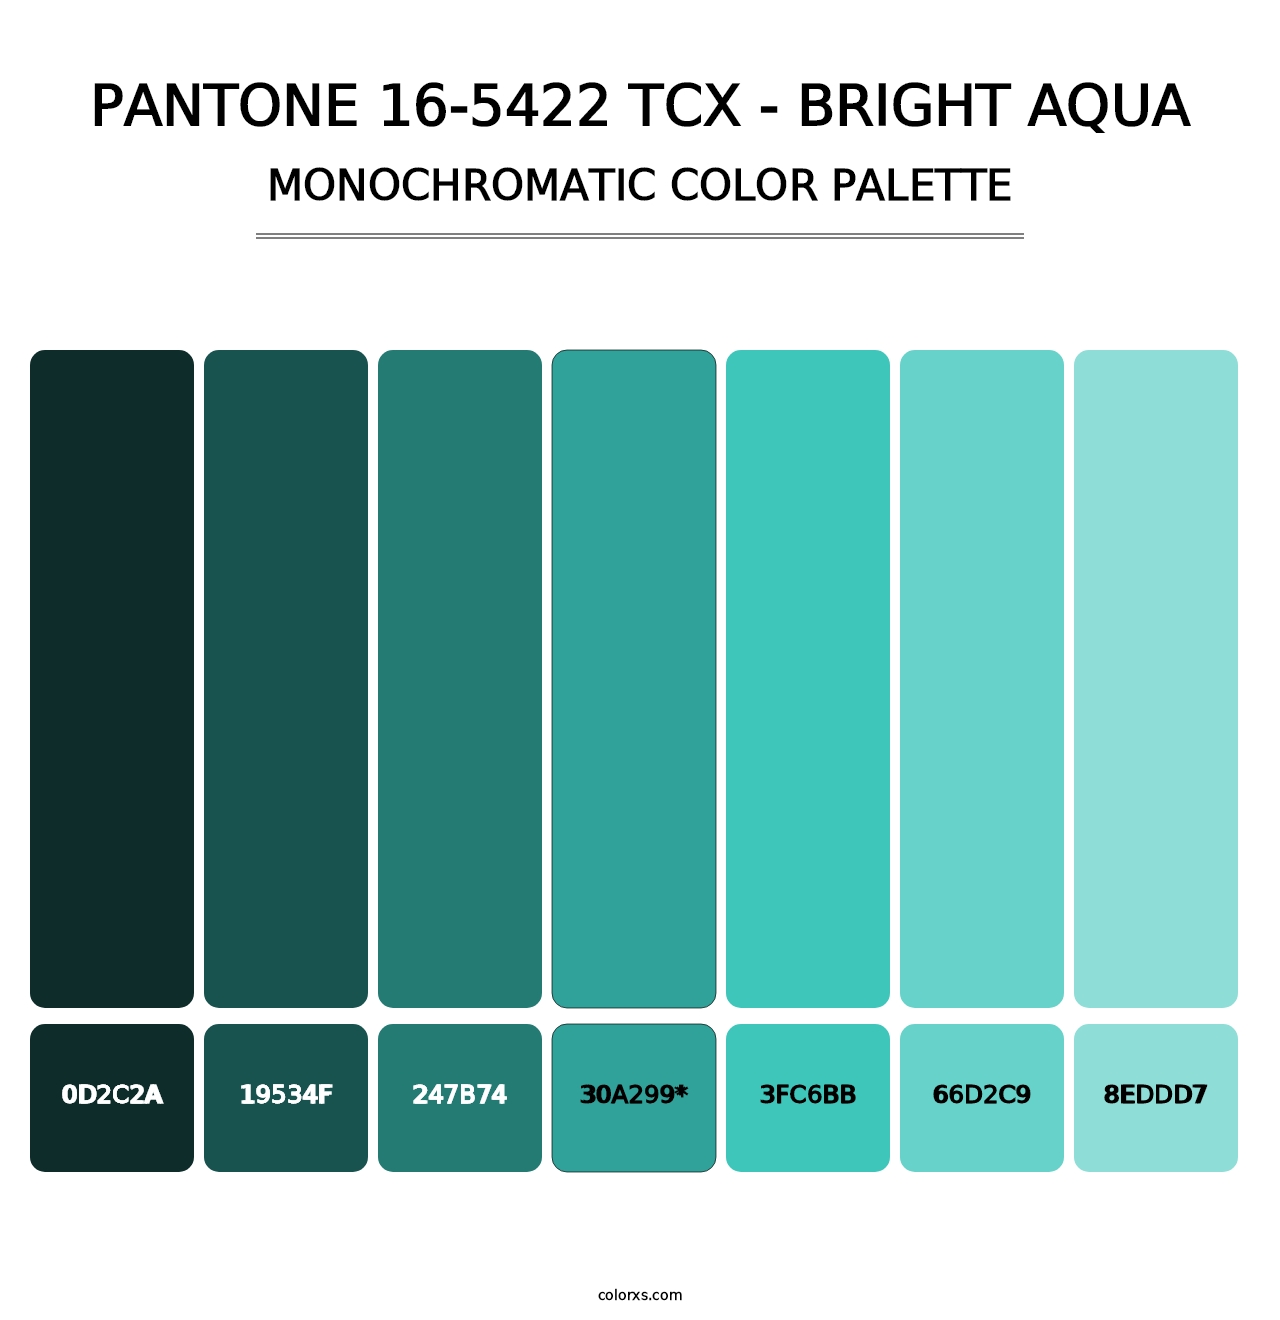 PANTONE 16-5422 TCX - Bright Aqua - Monochromatic Color Palette